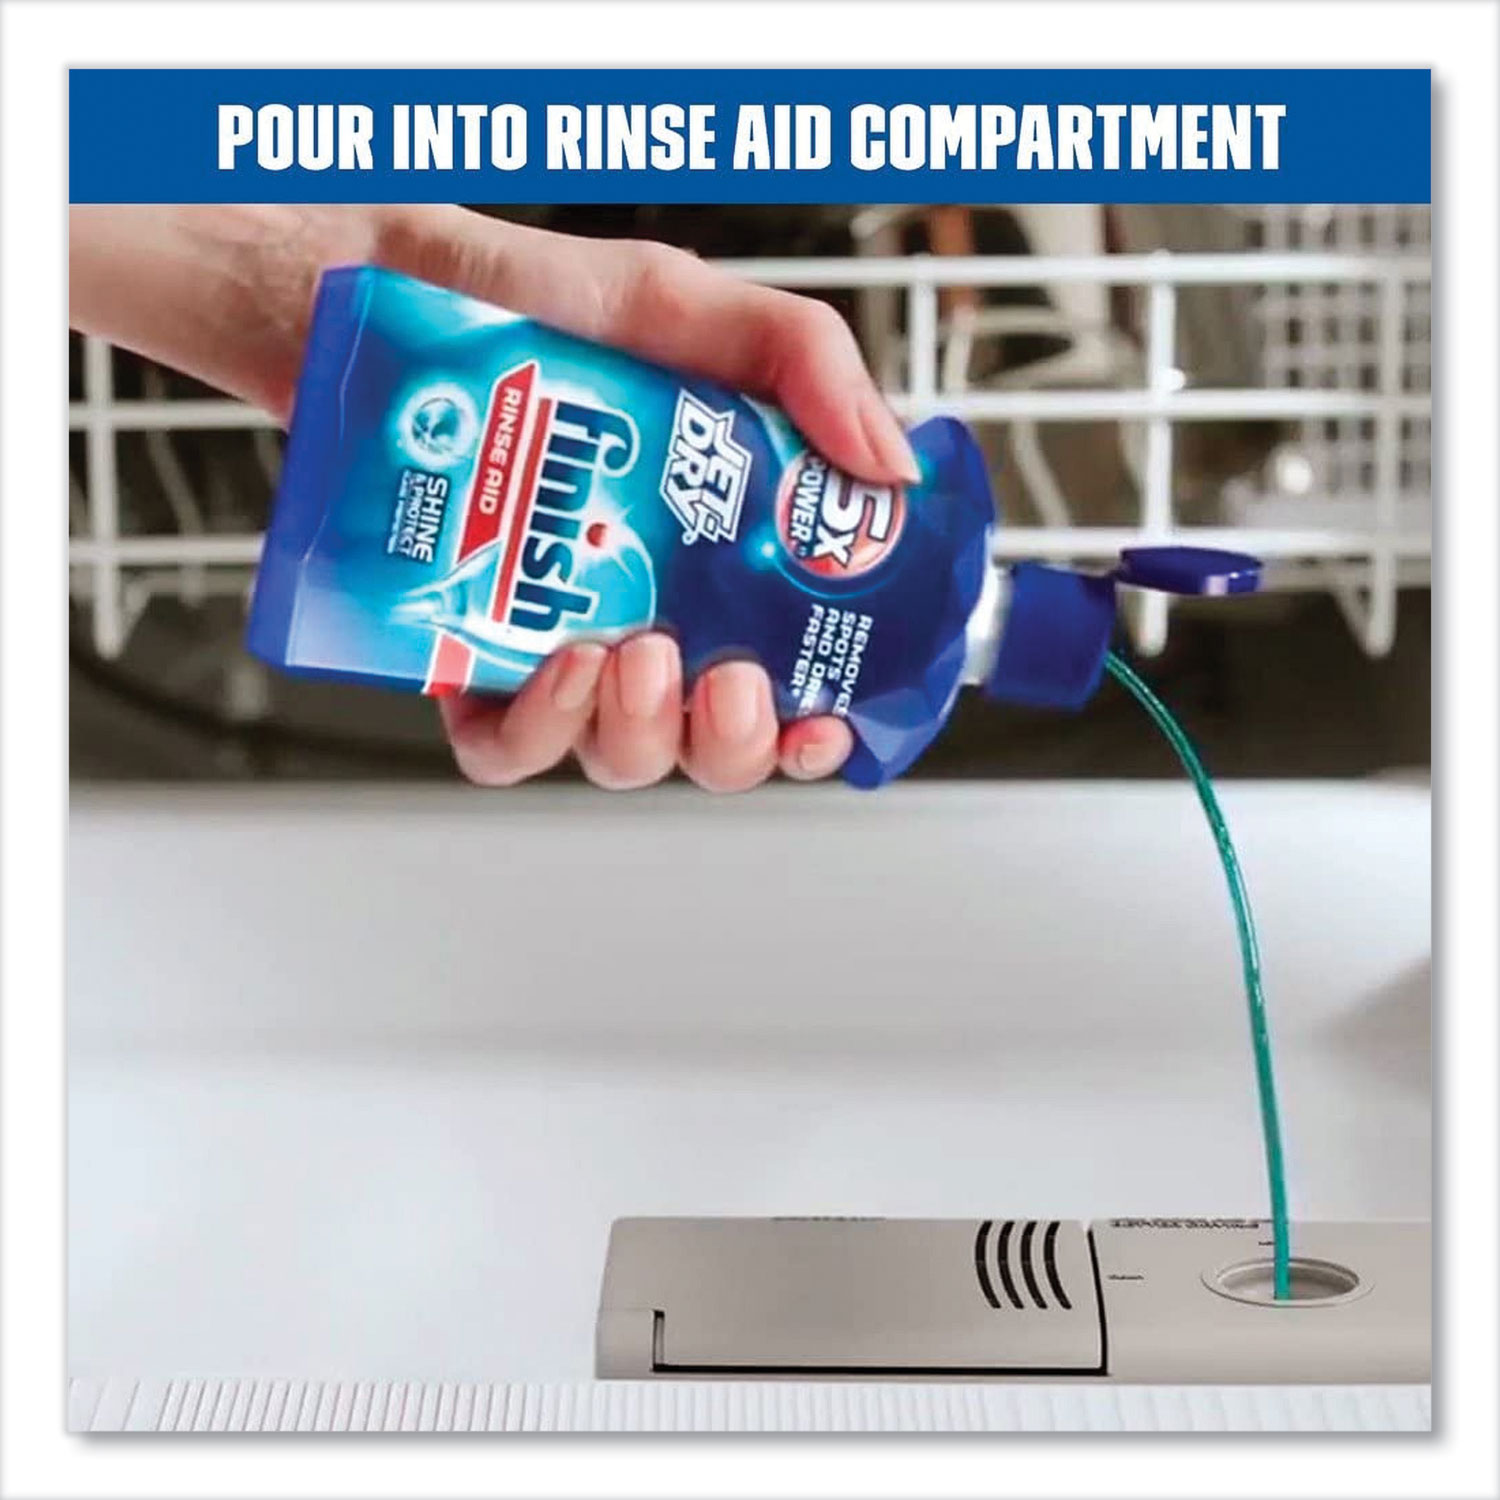 FINISH® Jet-Dry Rinse Agent, 16 oz Bottle, 6/Carton